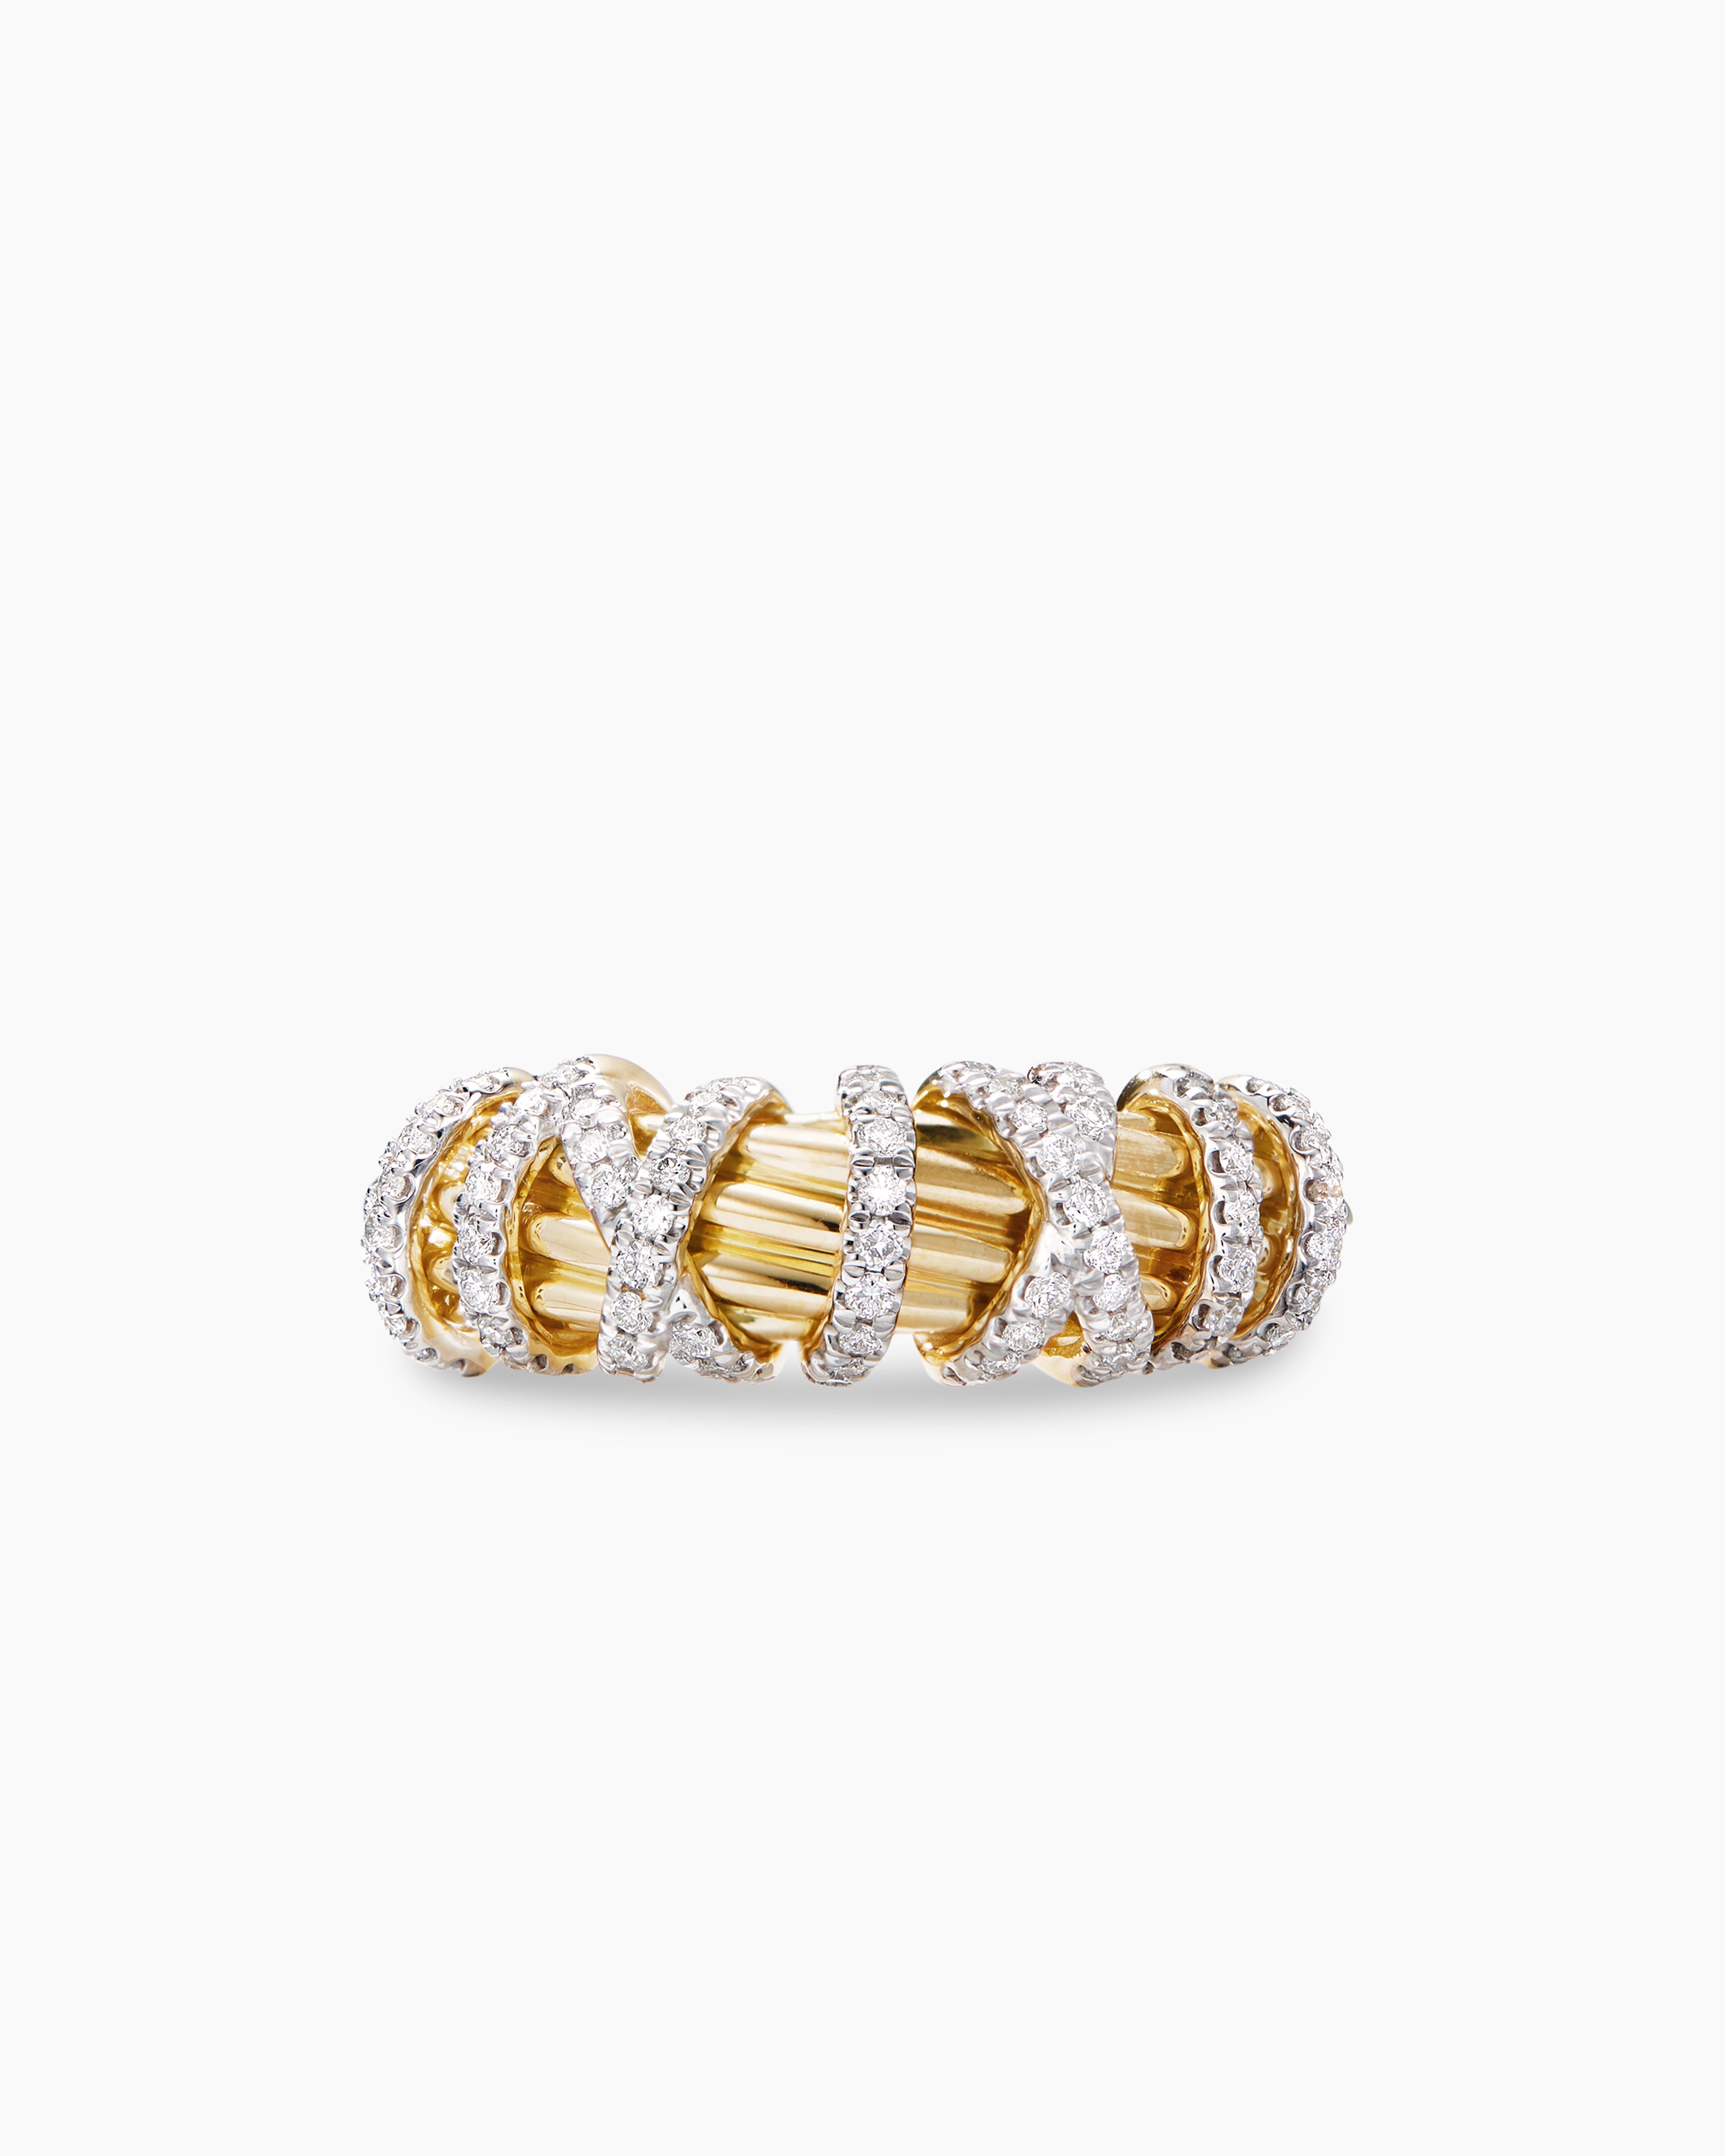 David Yurman Helena Tassel Earrings in 18K Yellow Gold with Diamonds